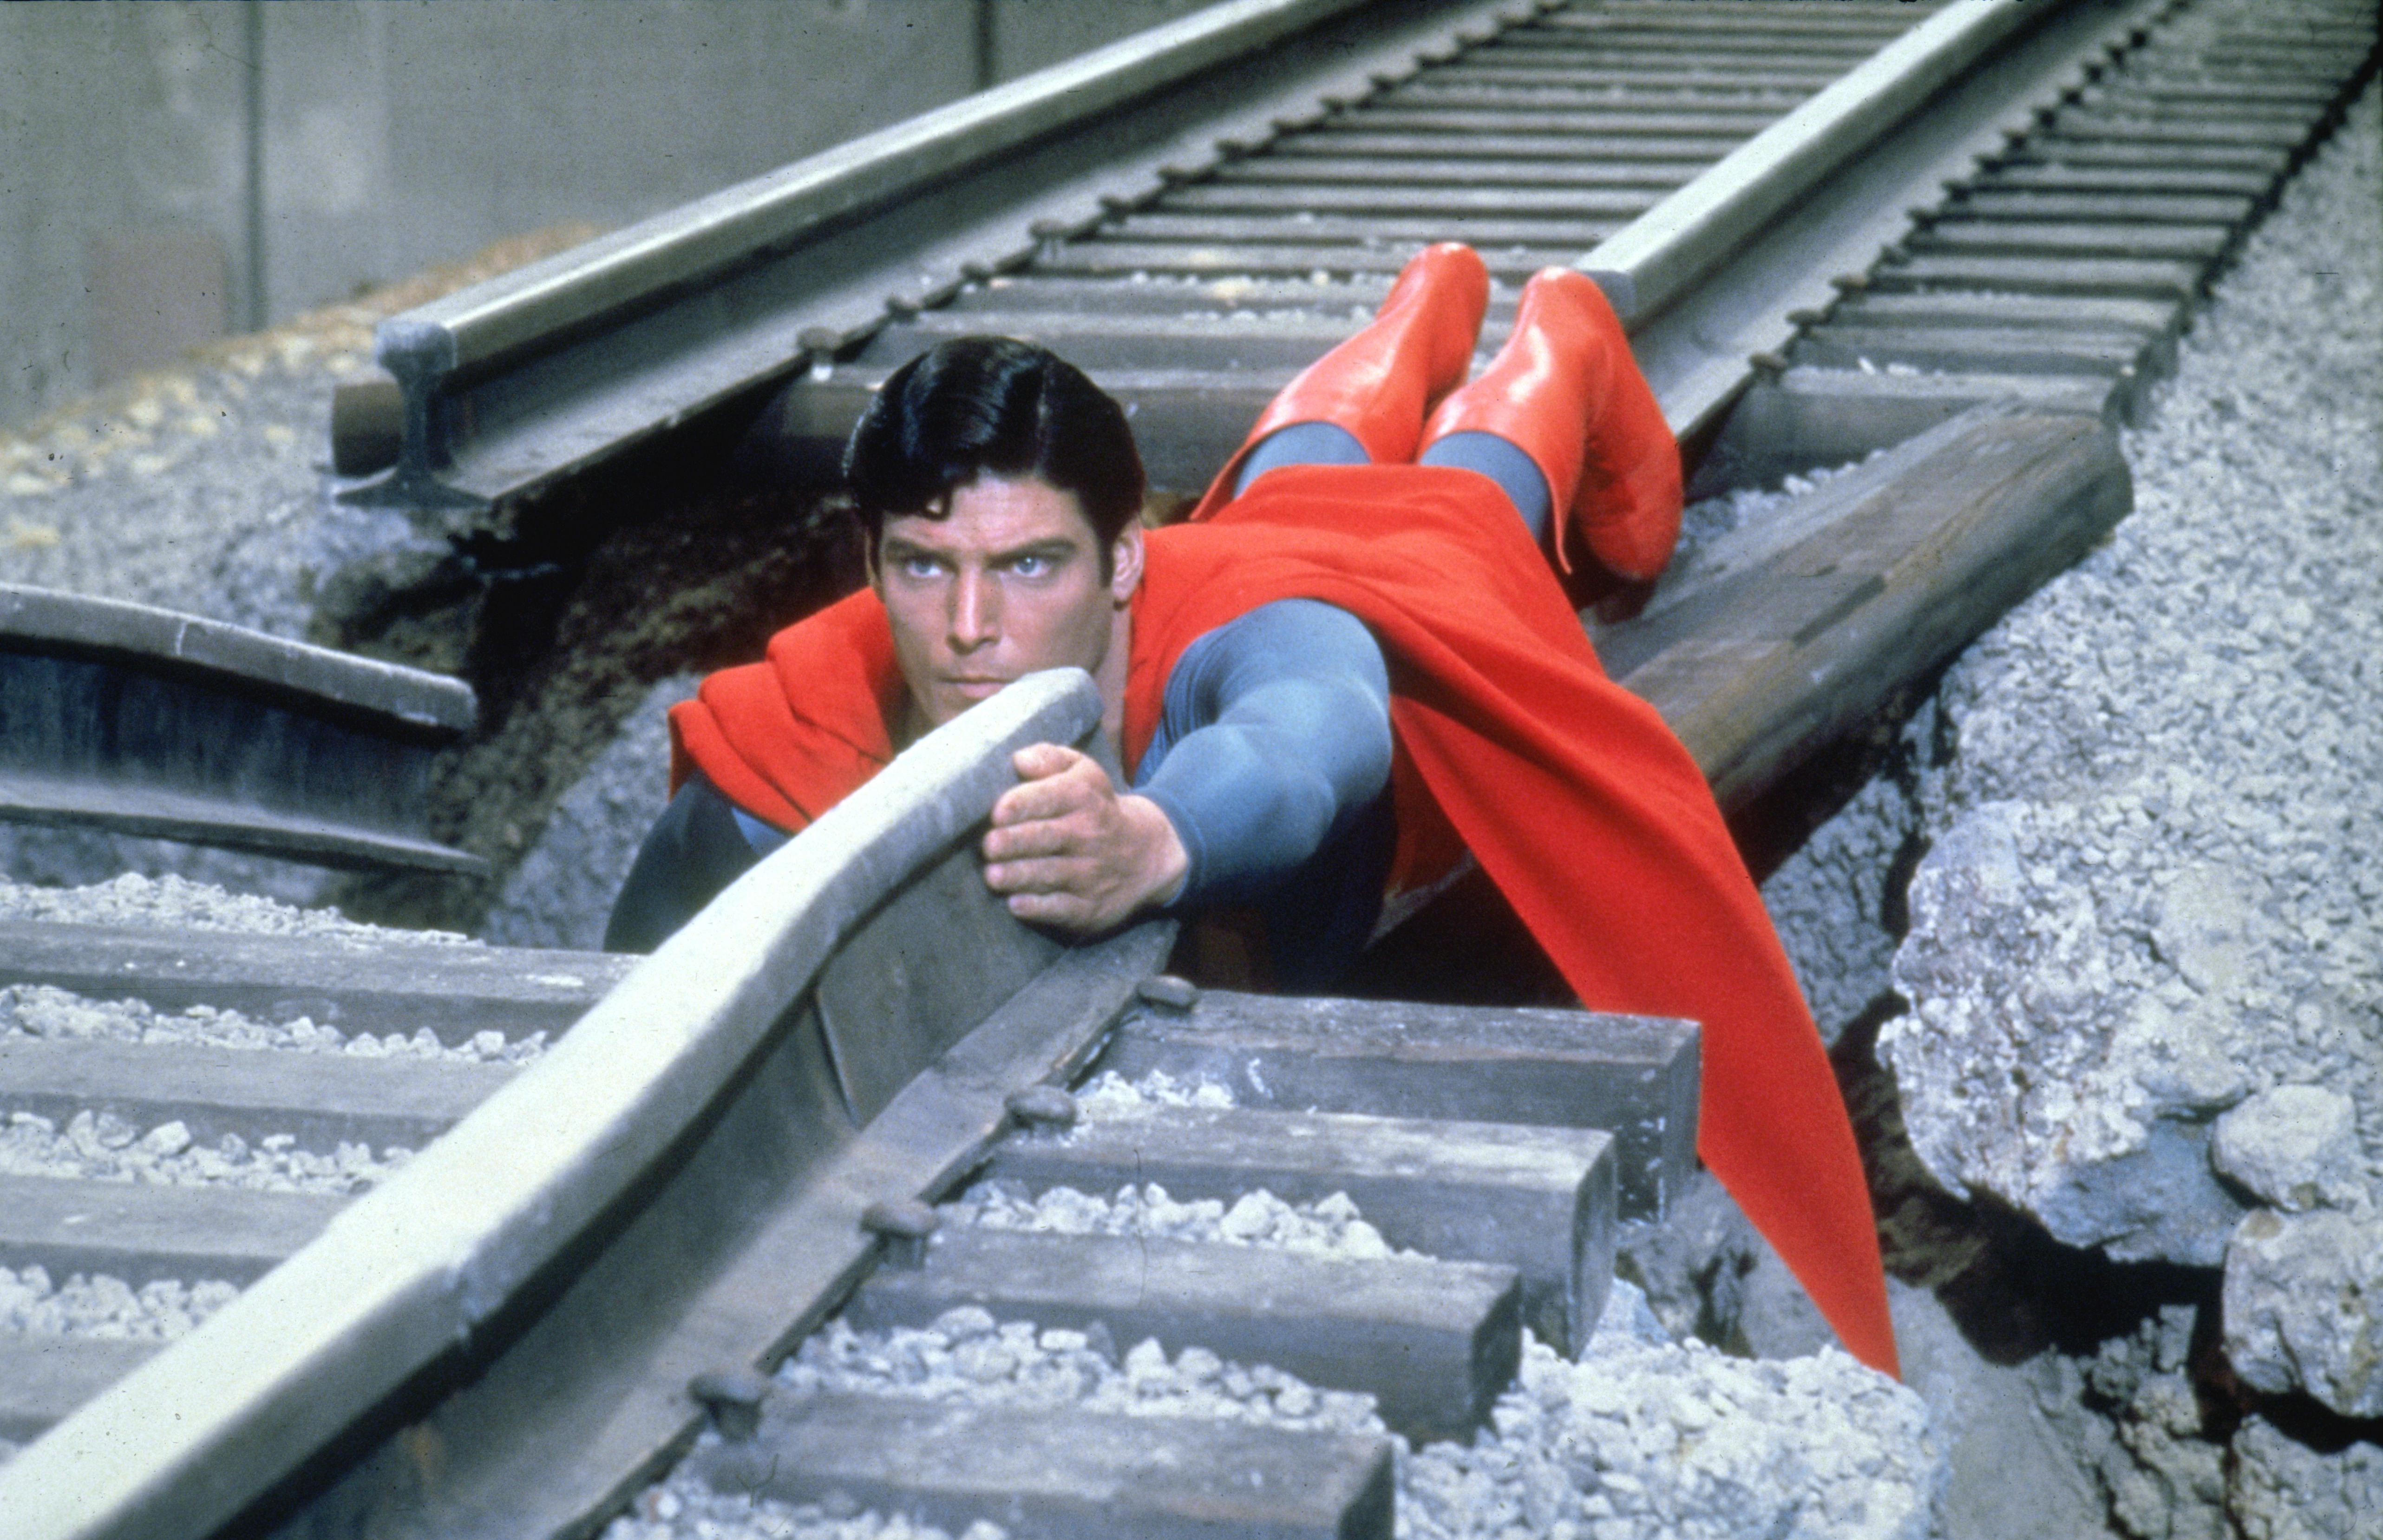 Superman (1978) Wallpapers